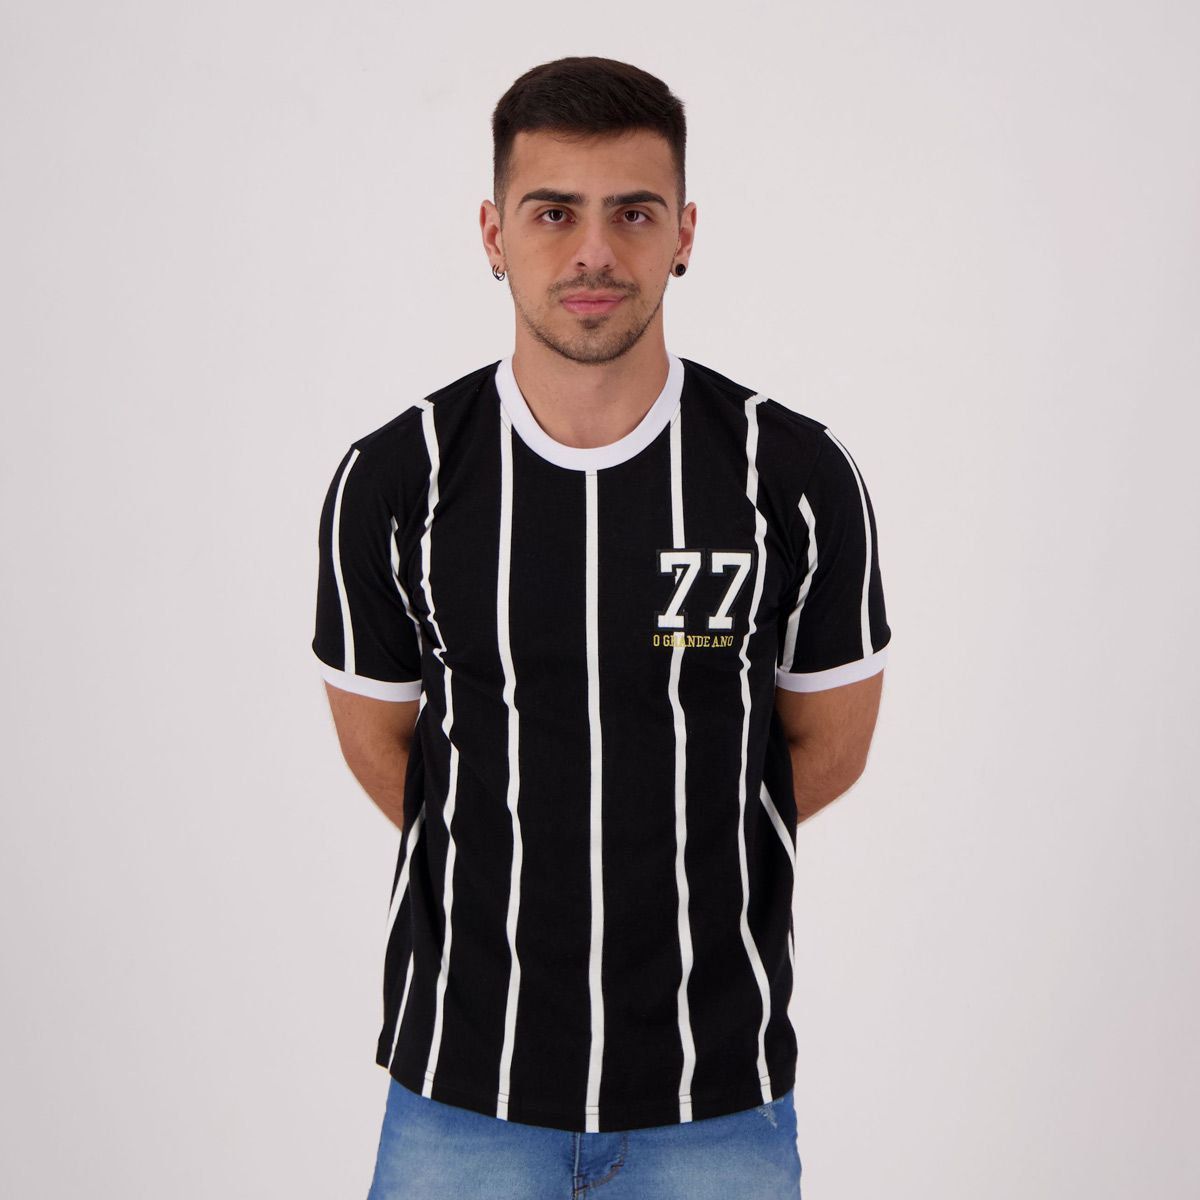 Camisas retrô futebol: Corinthians